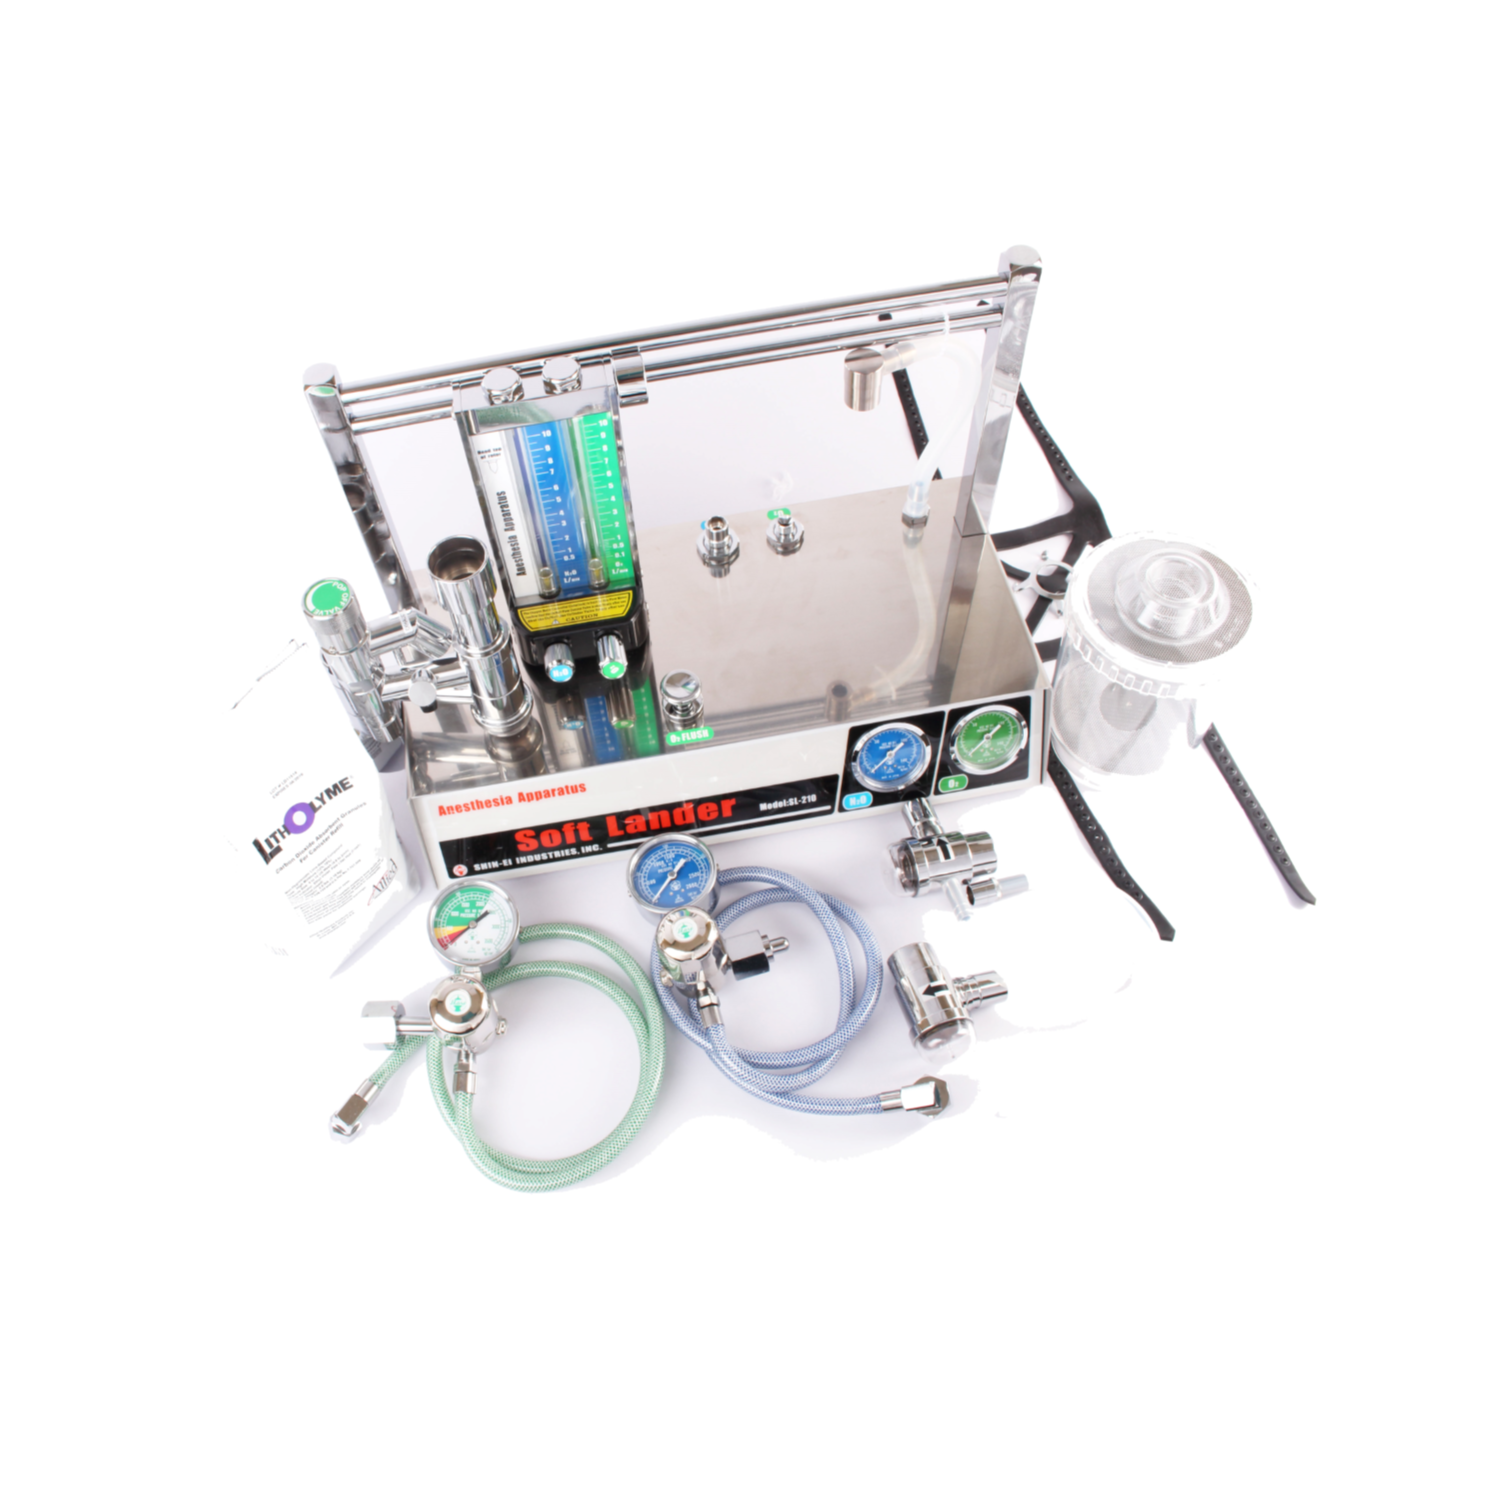 Anesthesia Machine SL-210 - Medical anesthesia equipment.